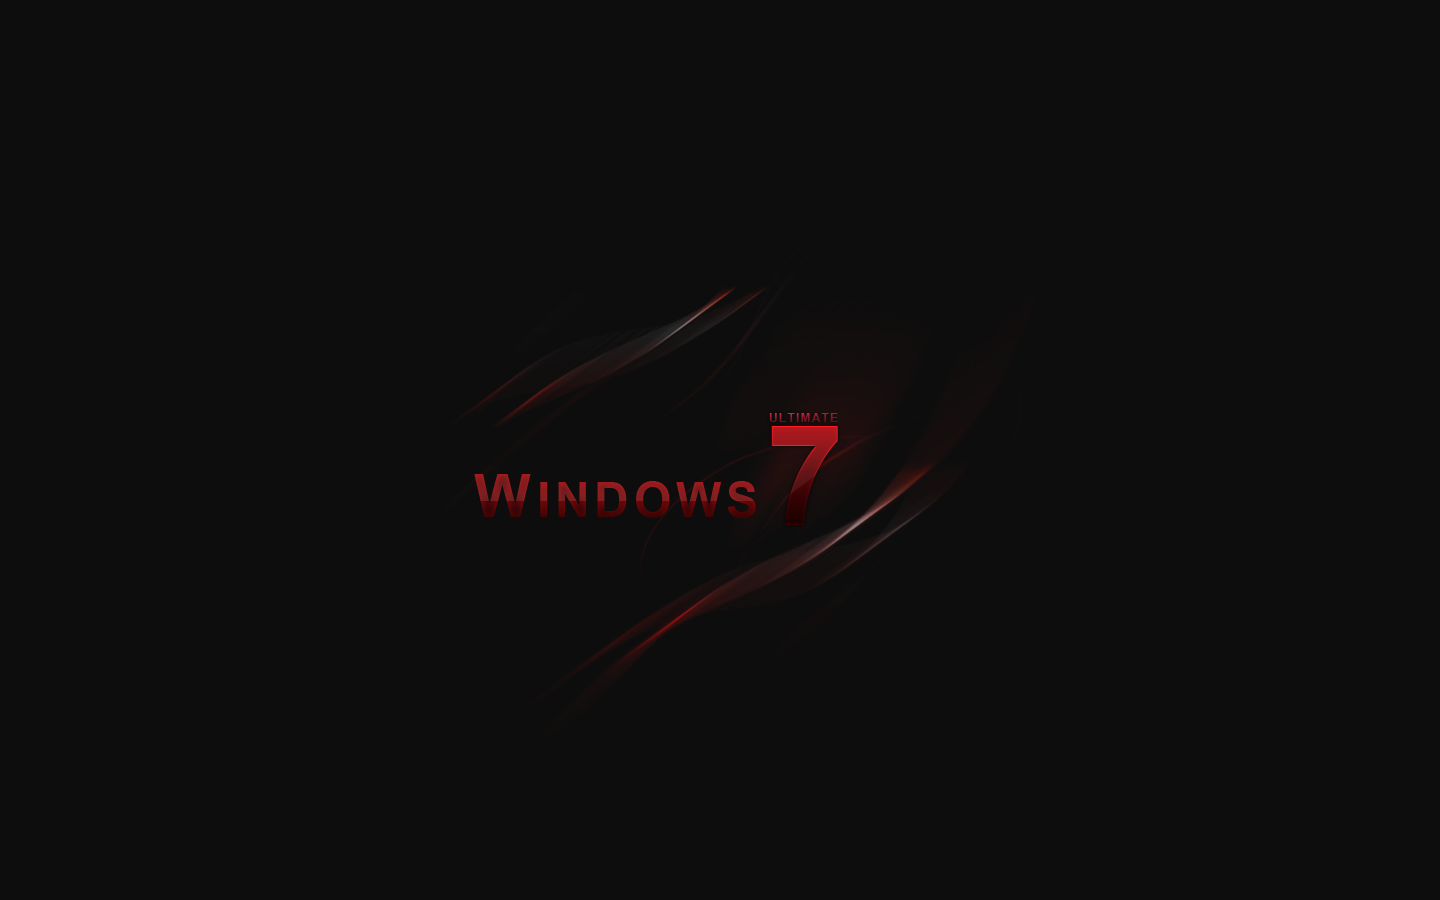 Windows 7 Wallpaper Red by DataBase379 on DeviantArt